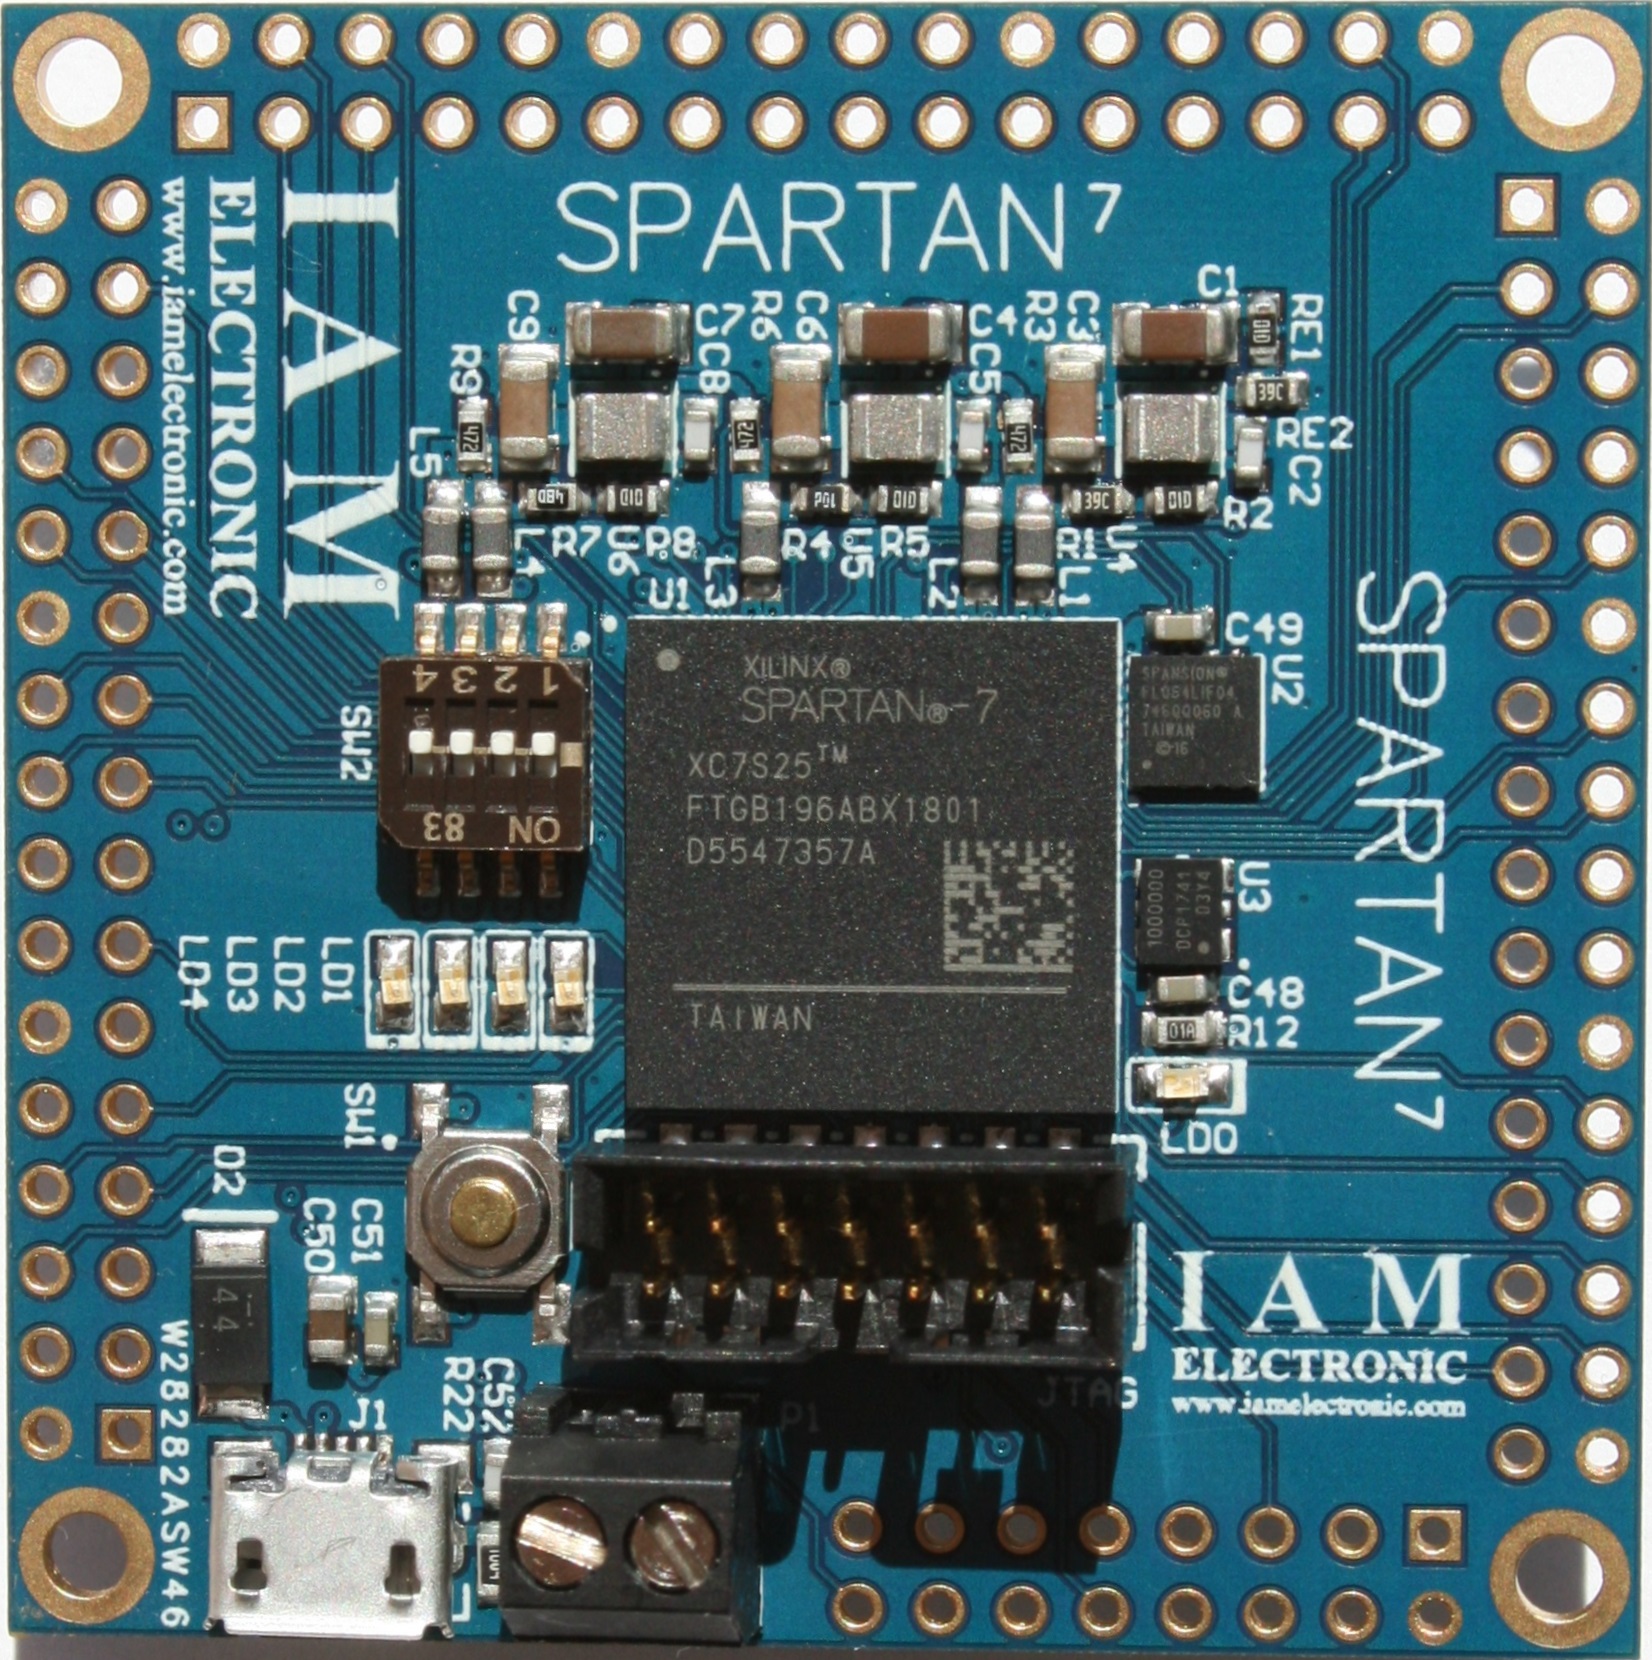 Spartan-7 FPGA board, top view